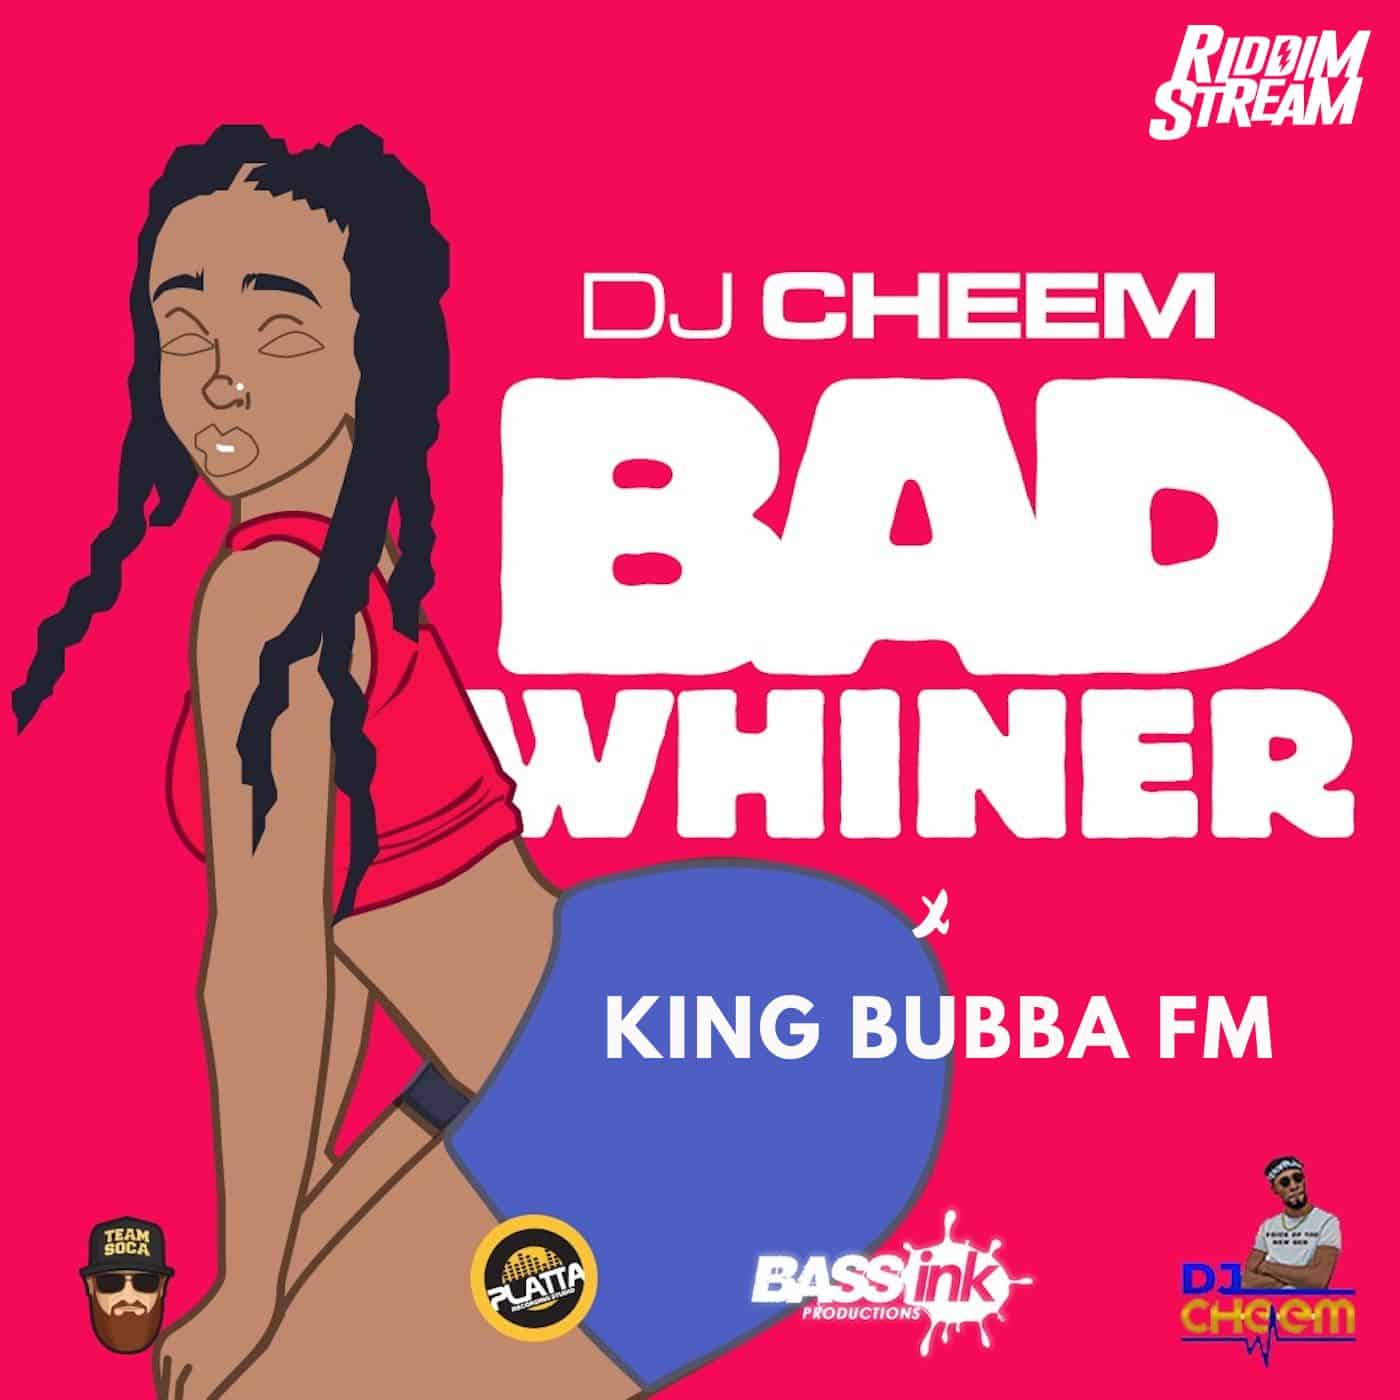 DJ Cheem X King Bubba FM - Bad Whiner